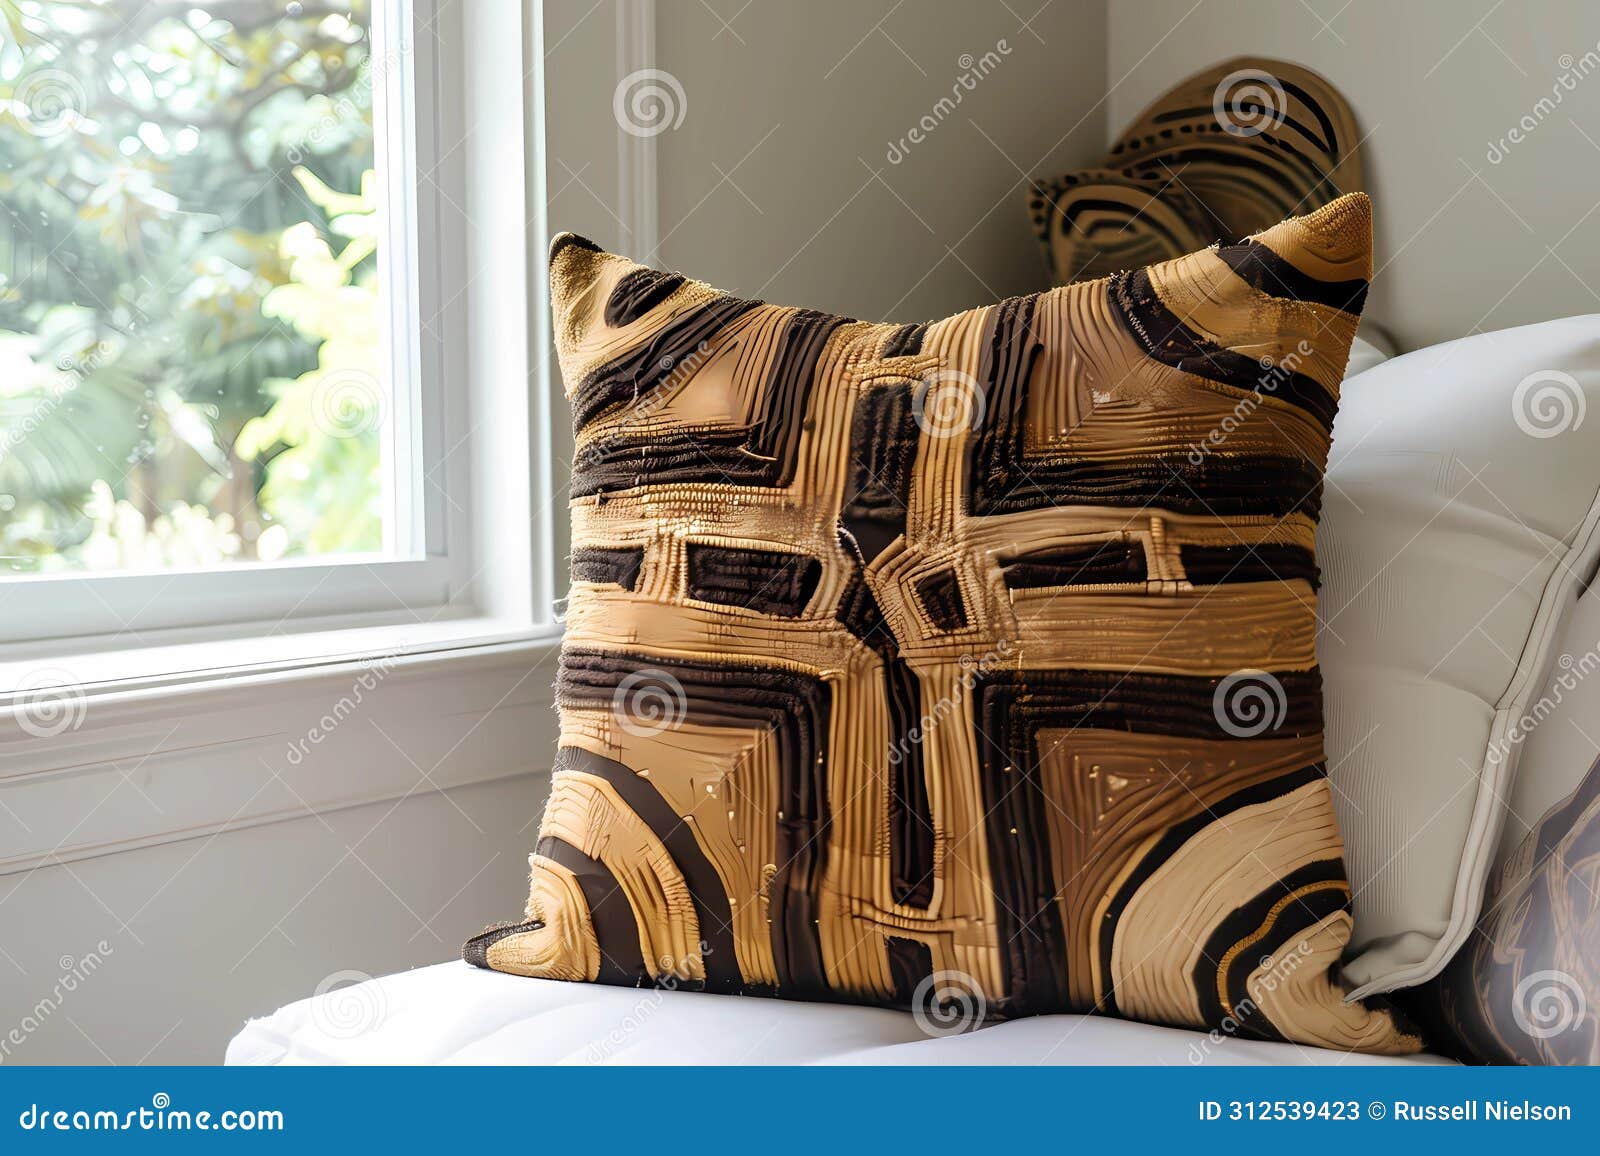 kuba cloth pillow - democratic republic of congo